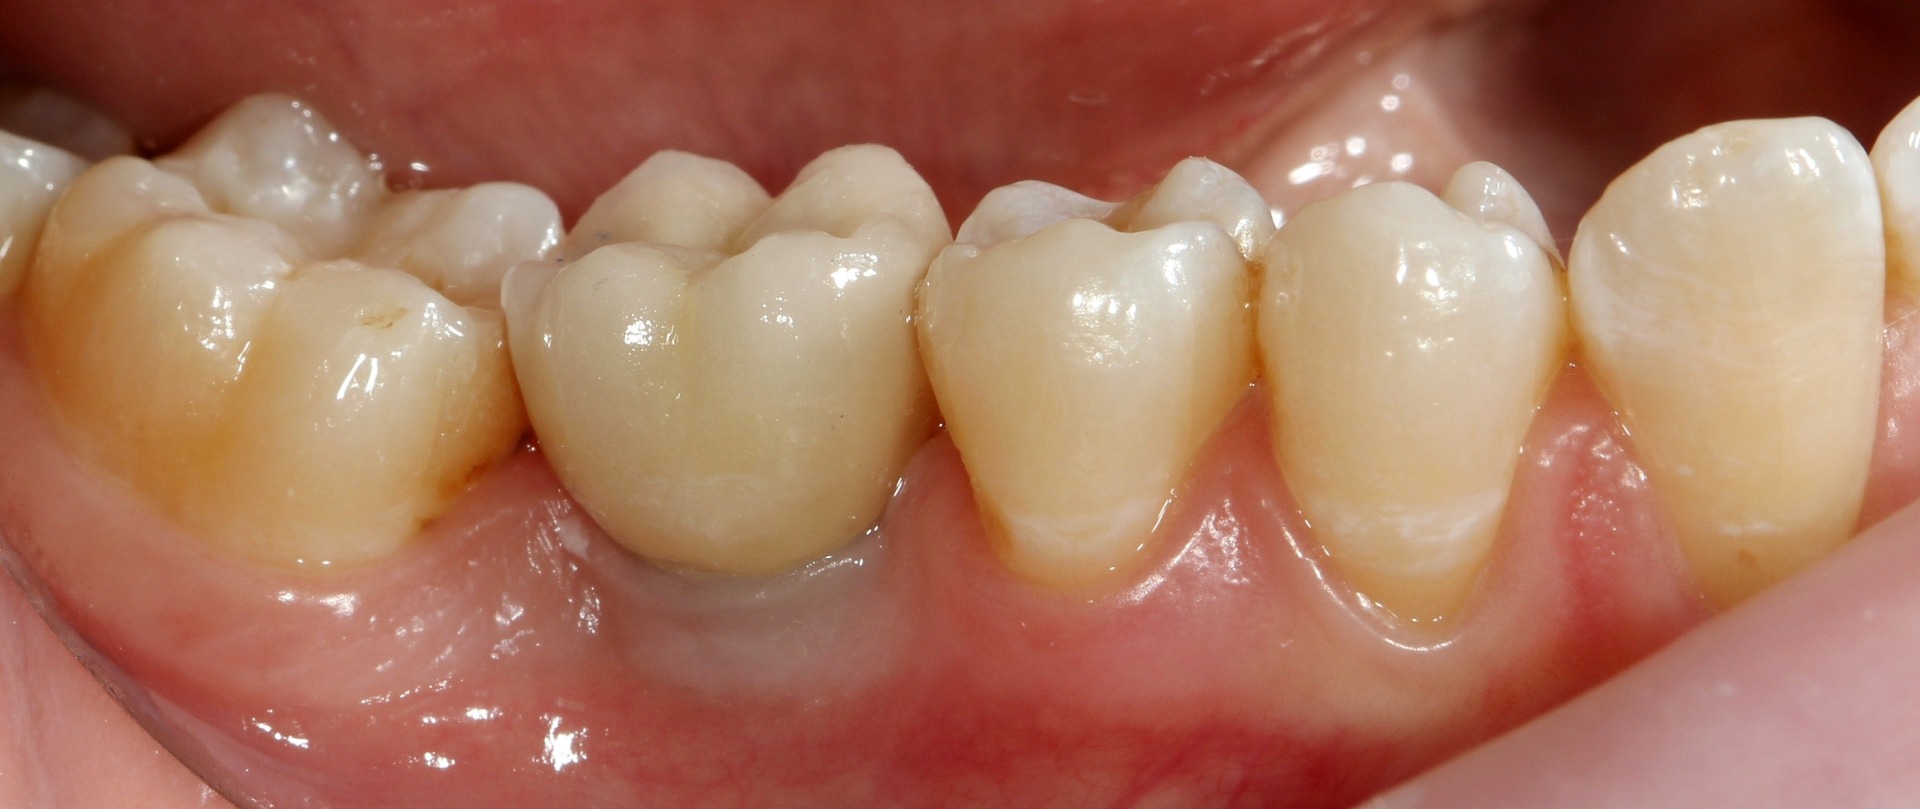 На фотографии показан пример обильного зубного камня на передних нижних зубах.